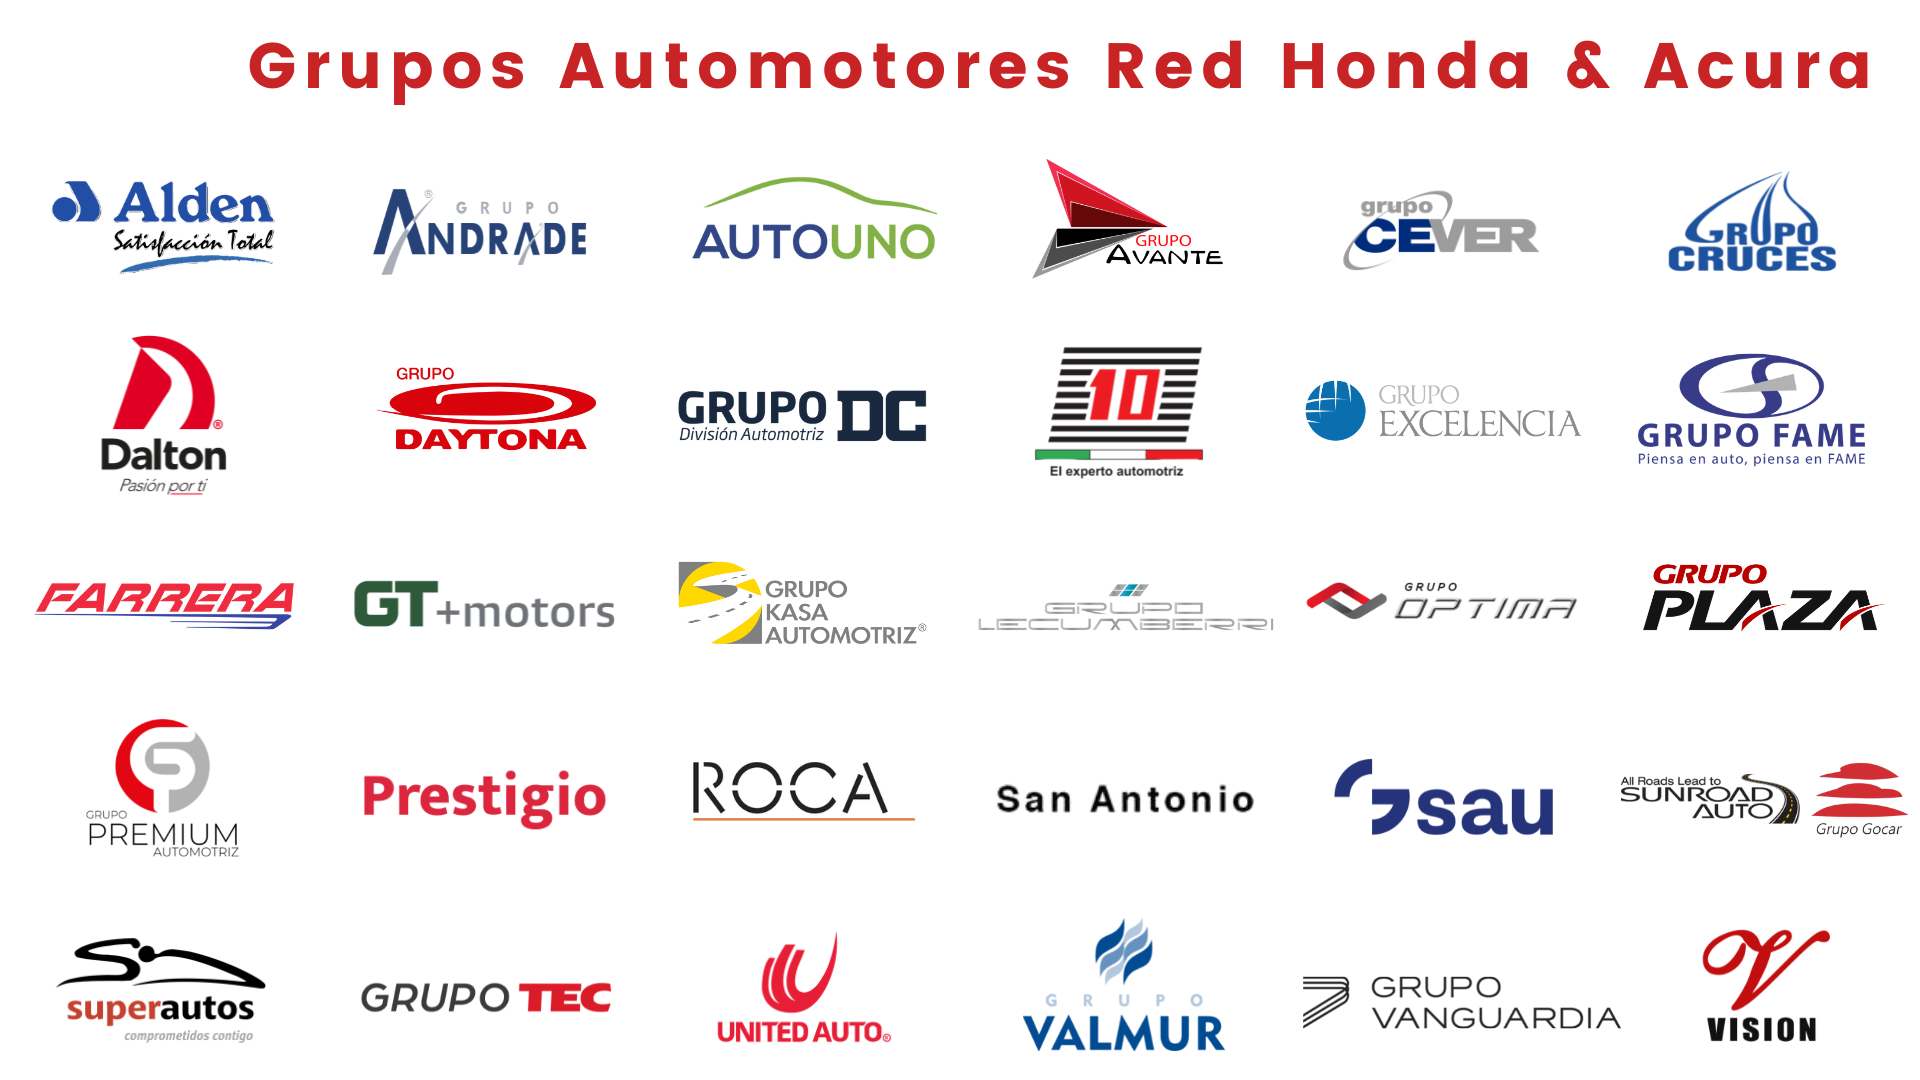 Grupos Red Honda Acura ene23